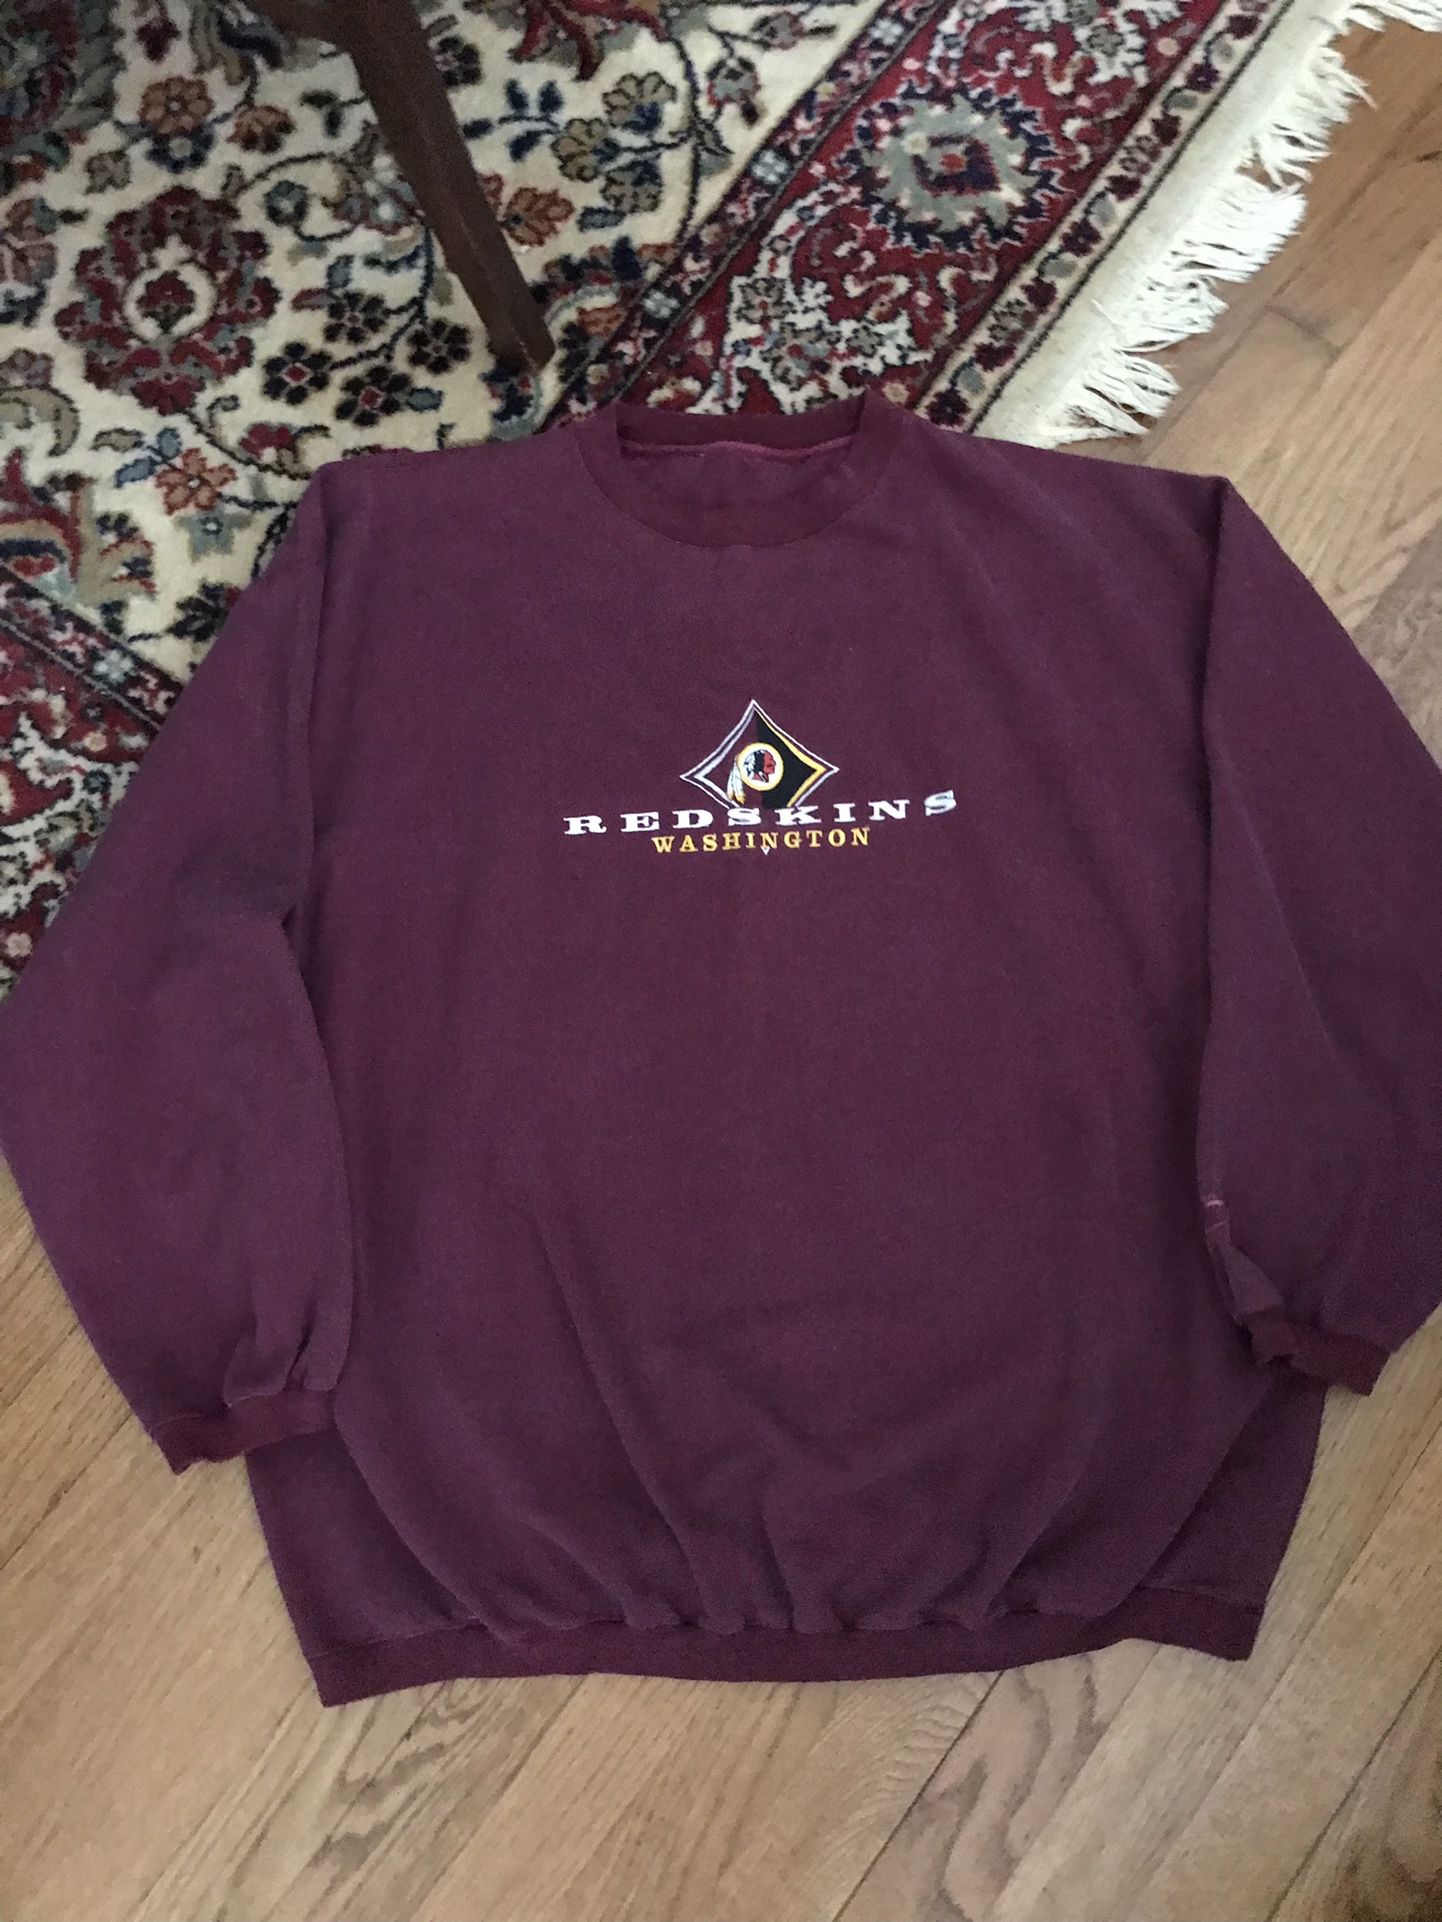 Vintage 1980’s Champion Washington Redskins Sweatshirt Size XL